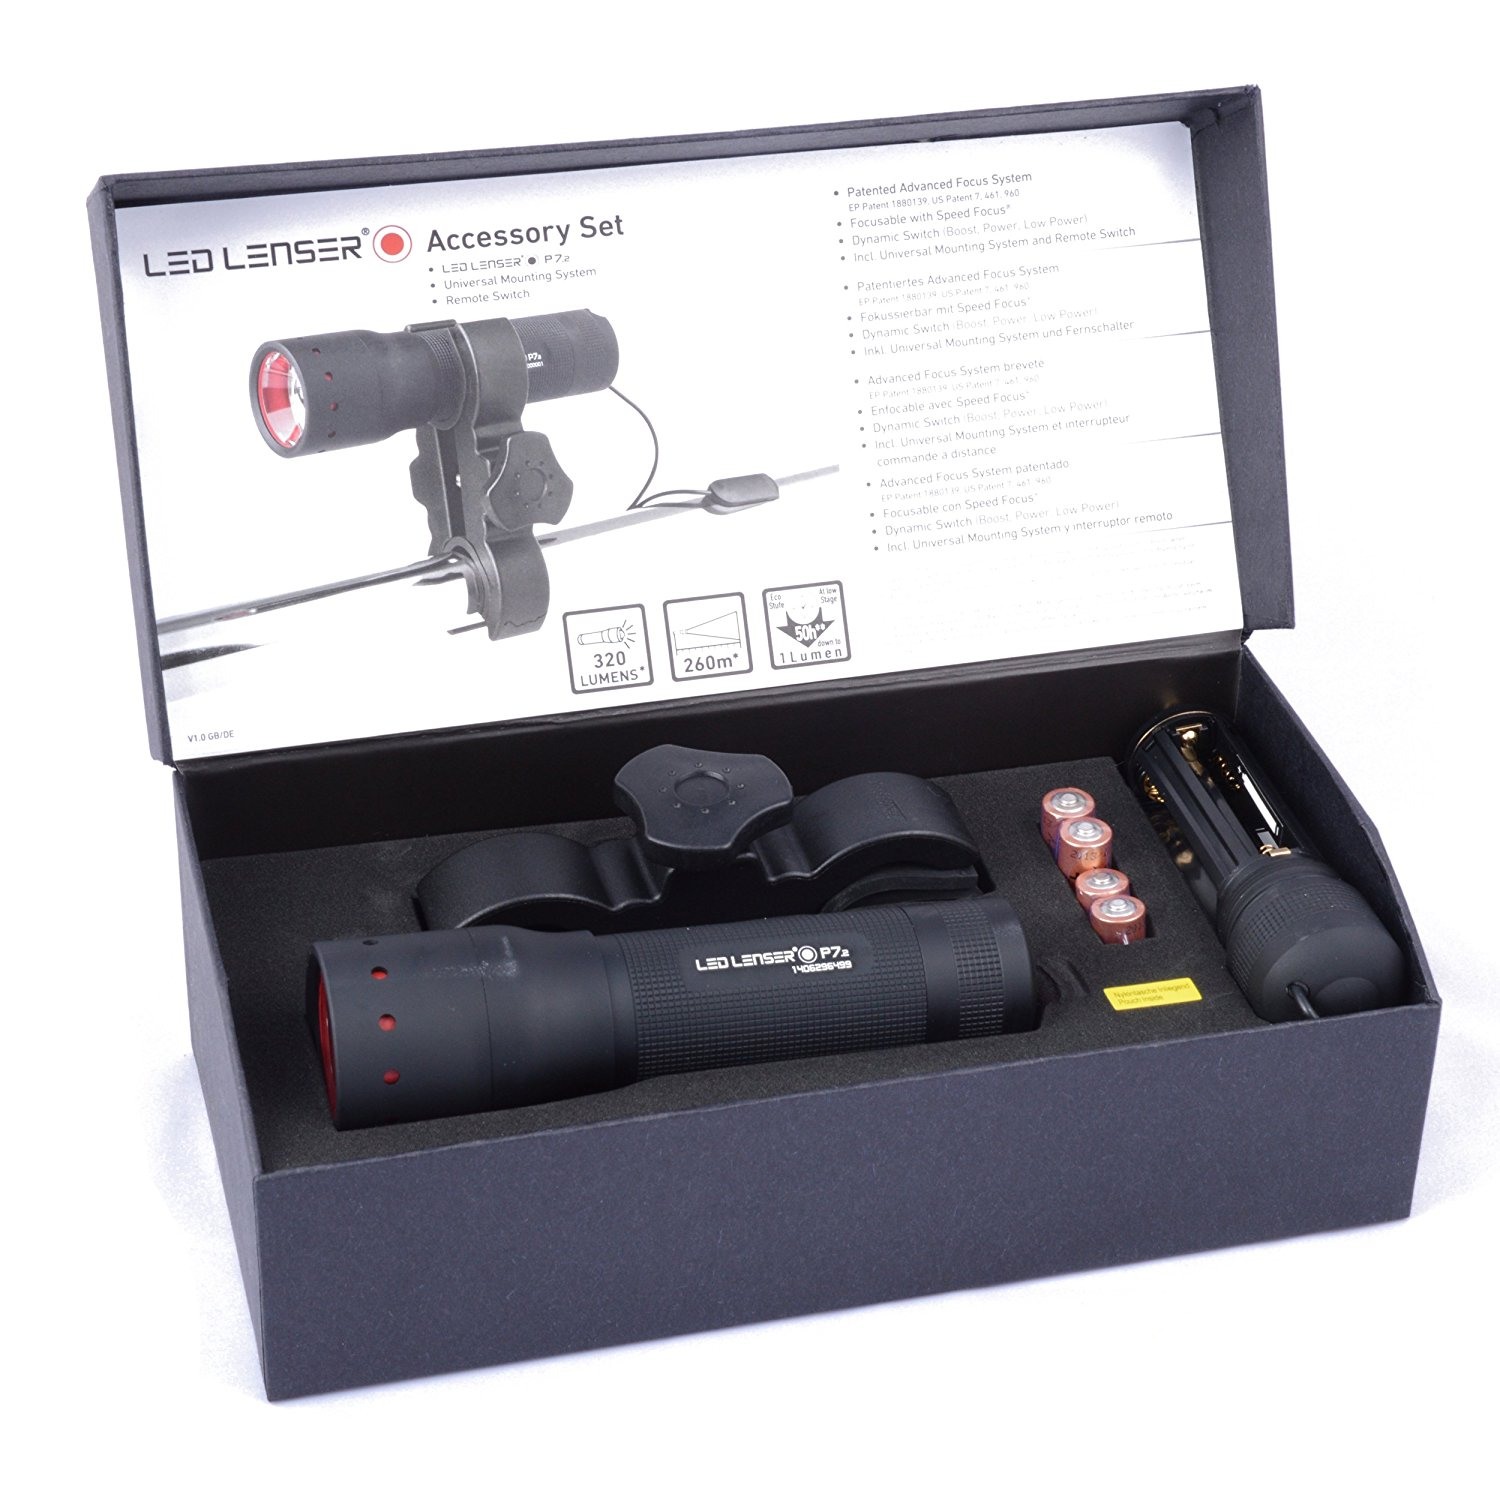 LED Lenser P7.2 with Pressure Switch + Gun Mount - 320 Lumens Professional torch - official LED Lenser stockist